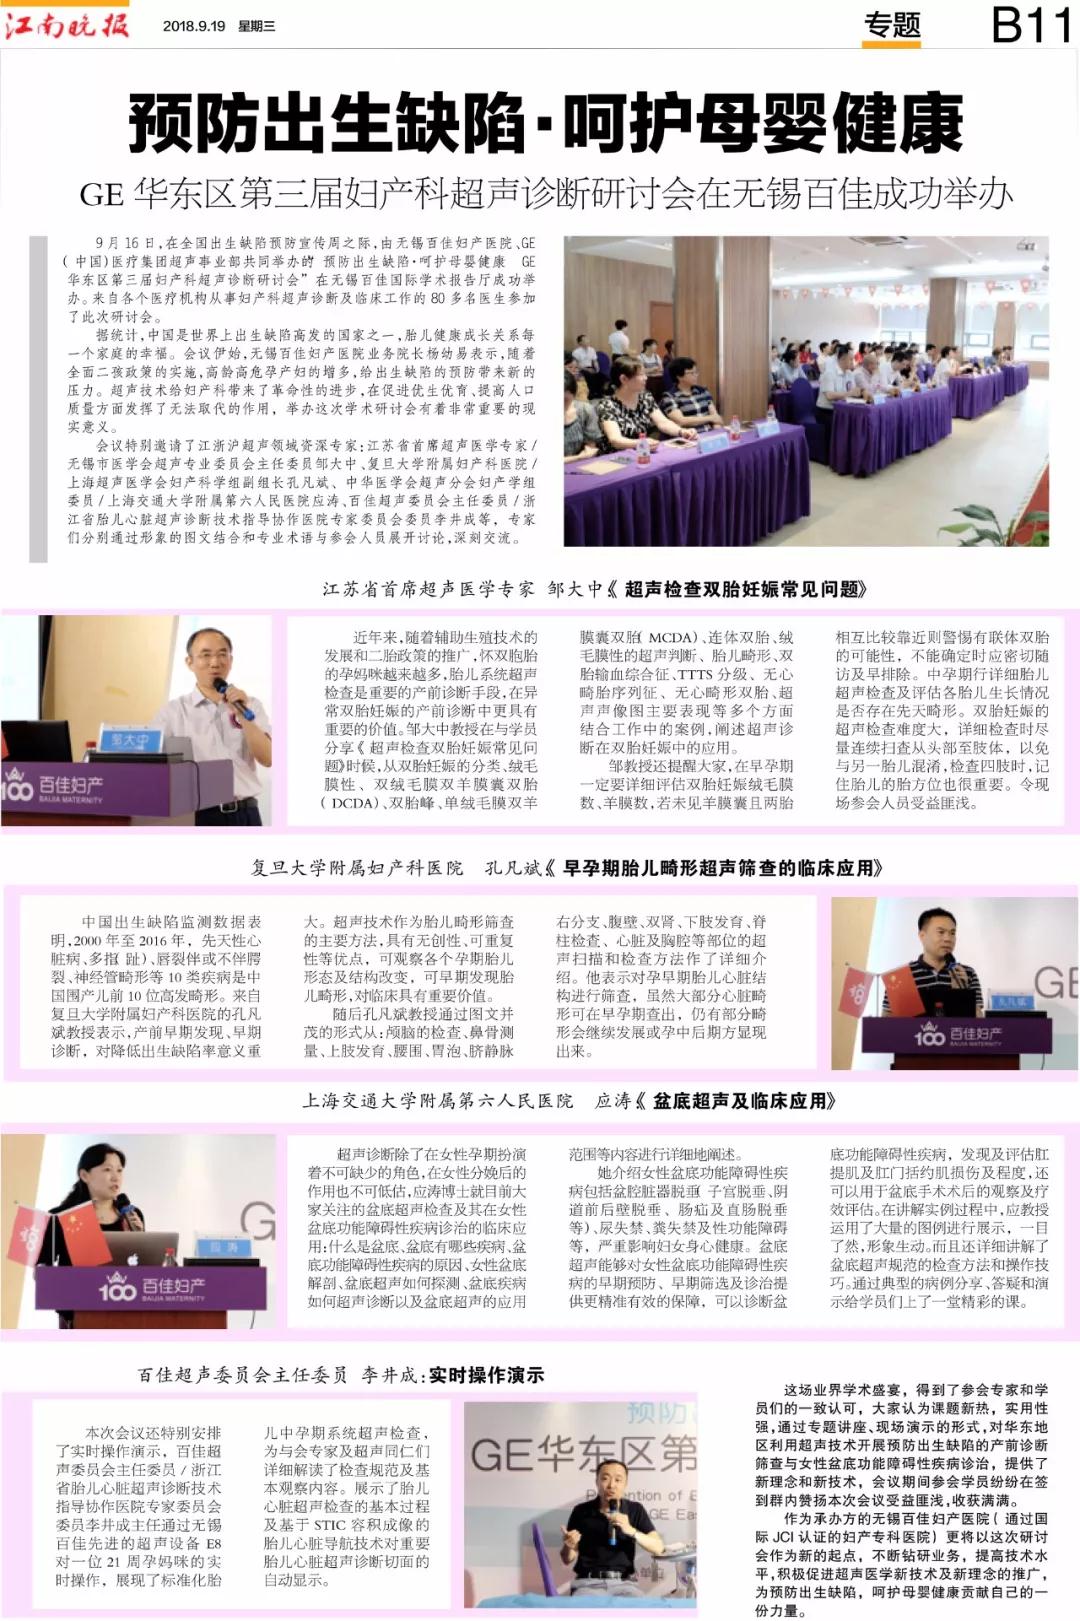 GE华东区第三届妇产科超声诊断研讨会在无锡百佳举办